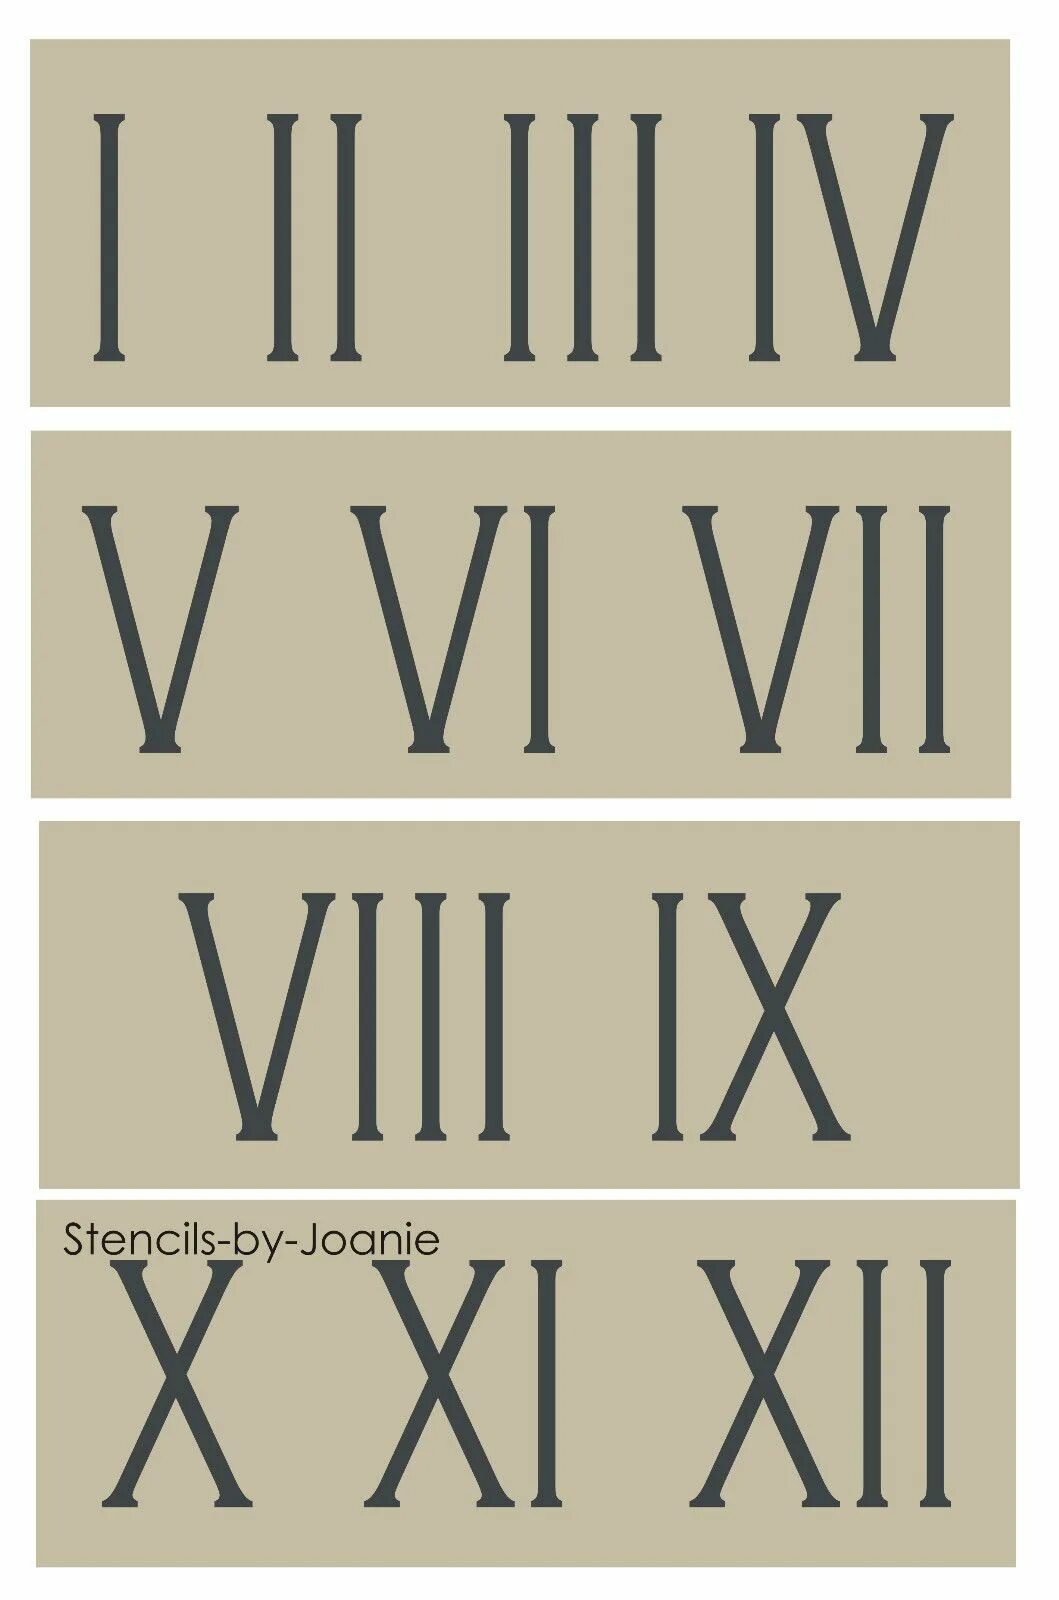 Римские цифры. Р̆̈й̈м̆̈с̆̈к̆̈й̈ӗ̈ ц̆̈ы̆̈ф̆̈р̆̈ы̆̈. Века римскими цифрами. Римские буквы и цифры. 10 век римскими